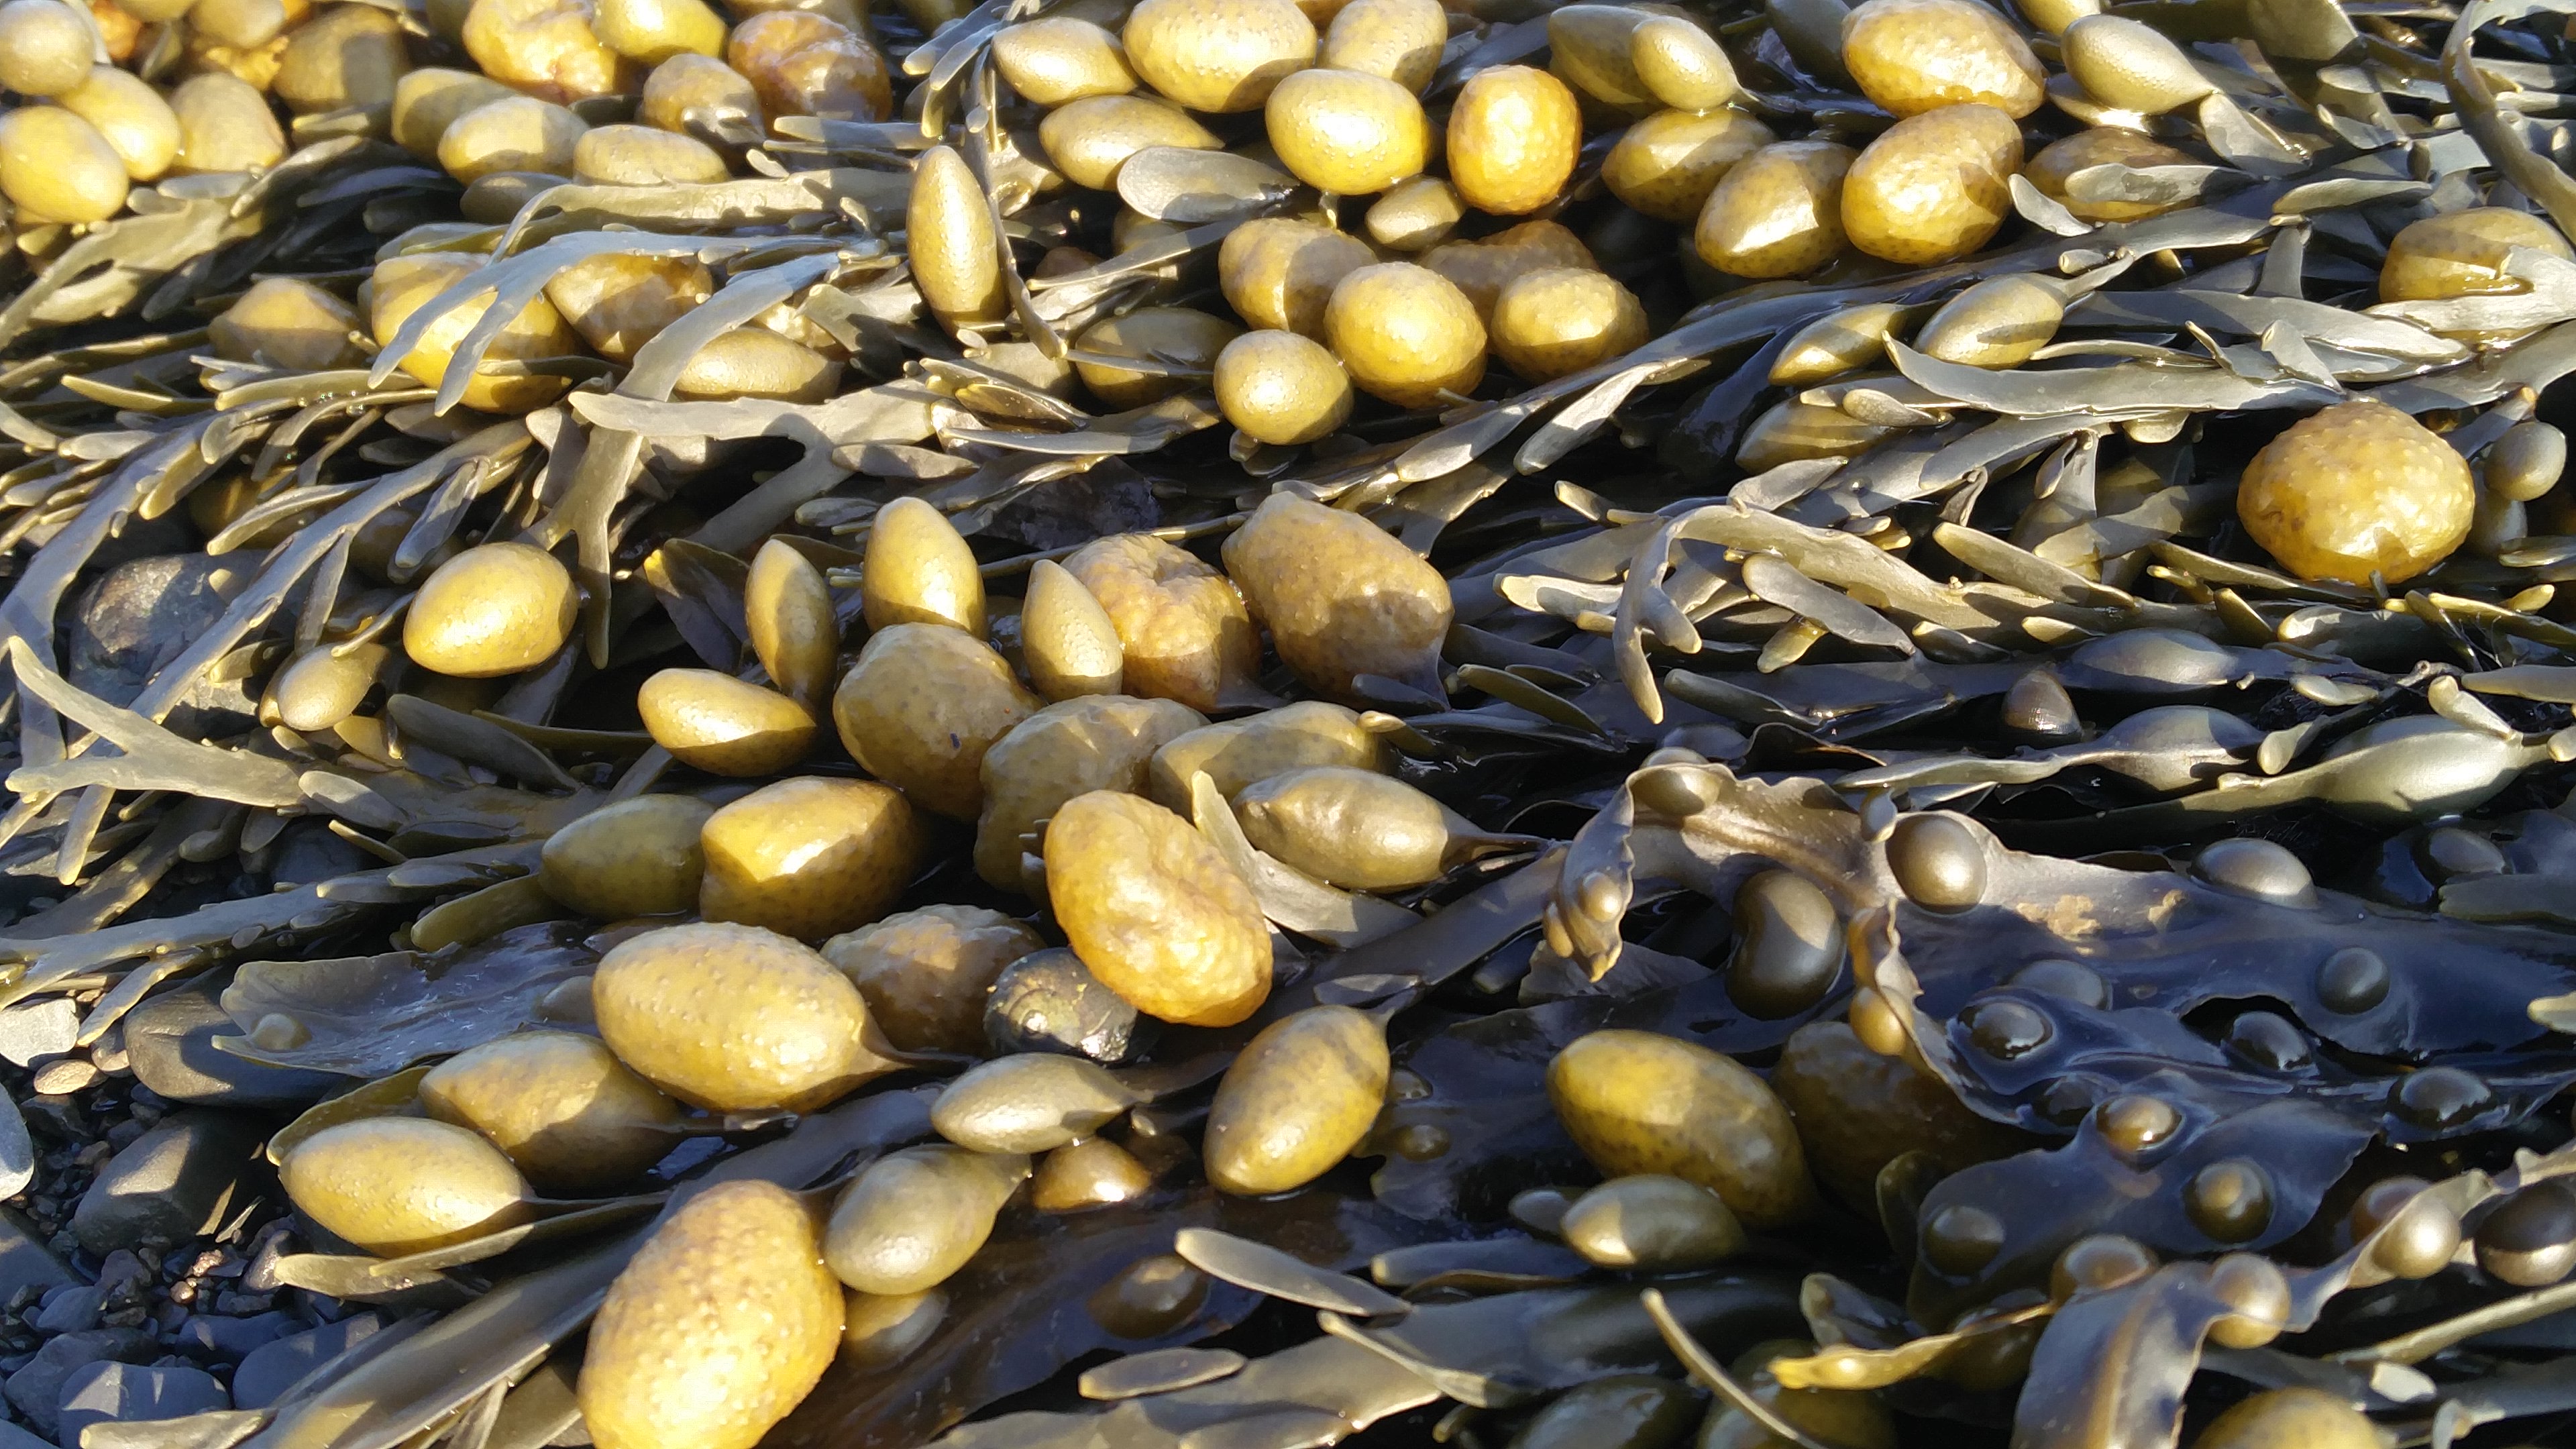 seaweed analysis at Celignis